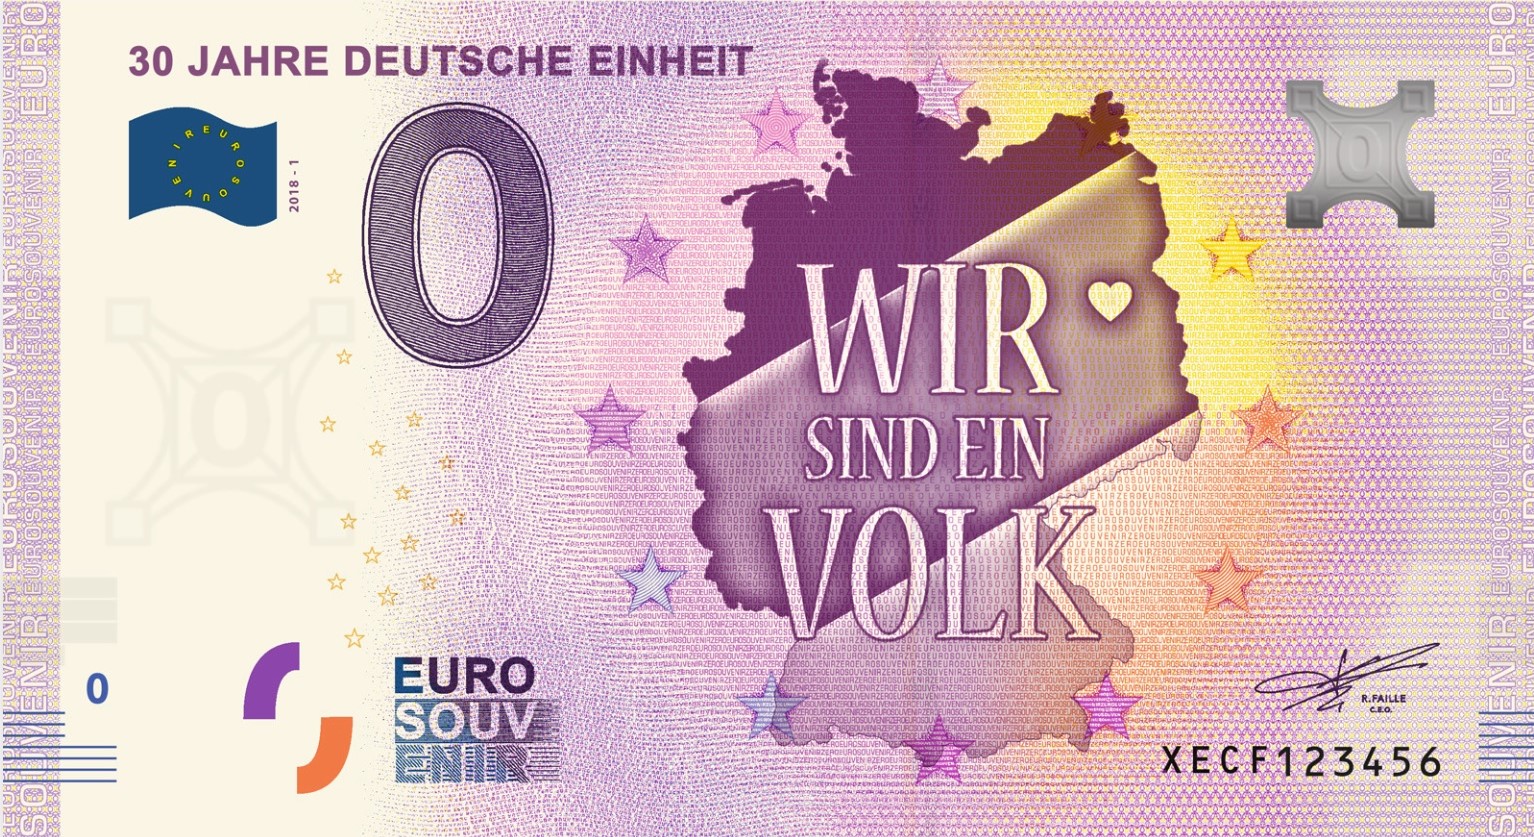 MDM's album of zero euro banknotes - 30 years of German Refunded unity